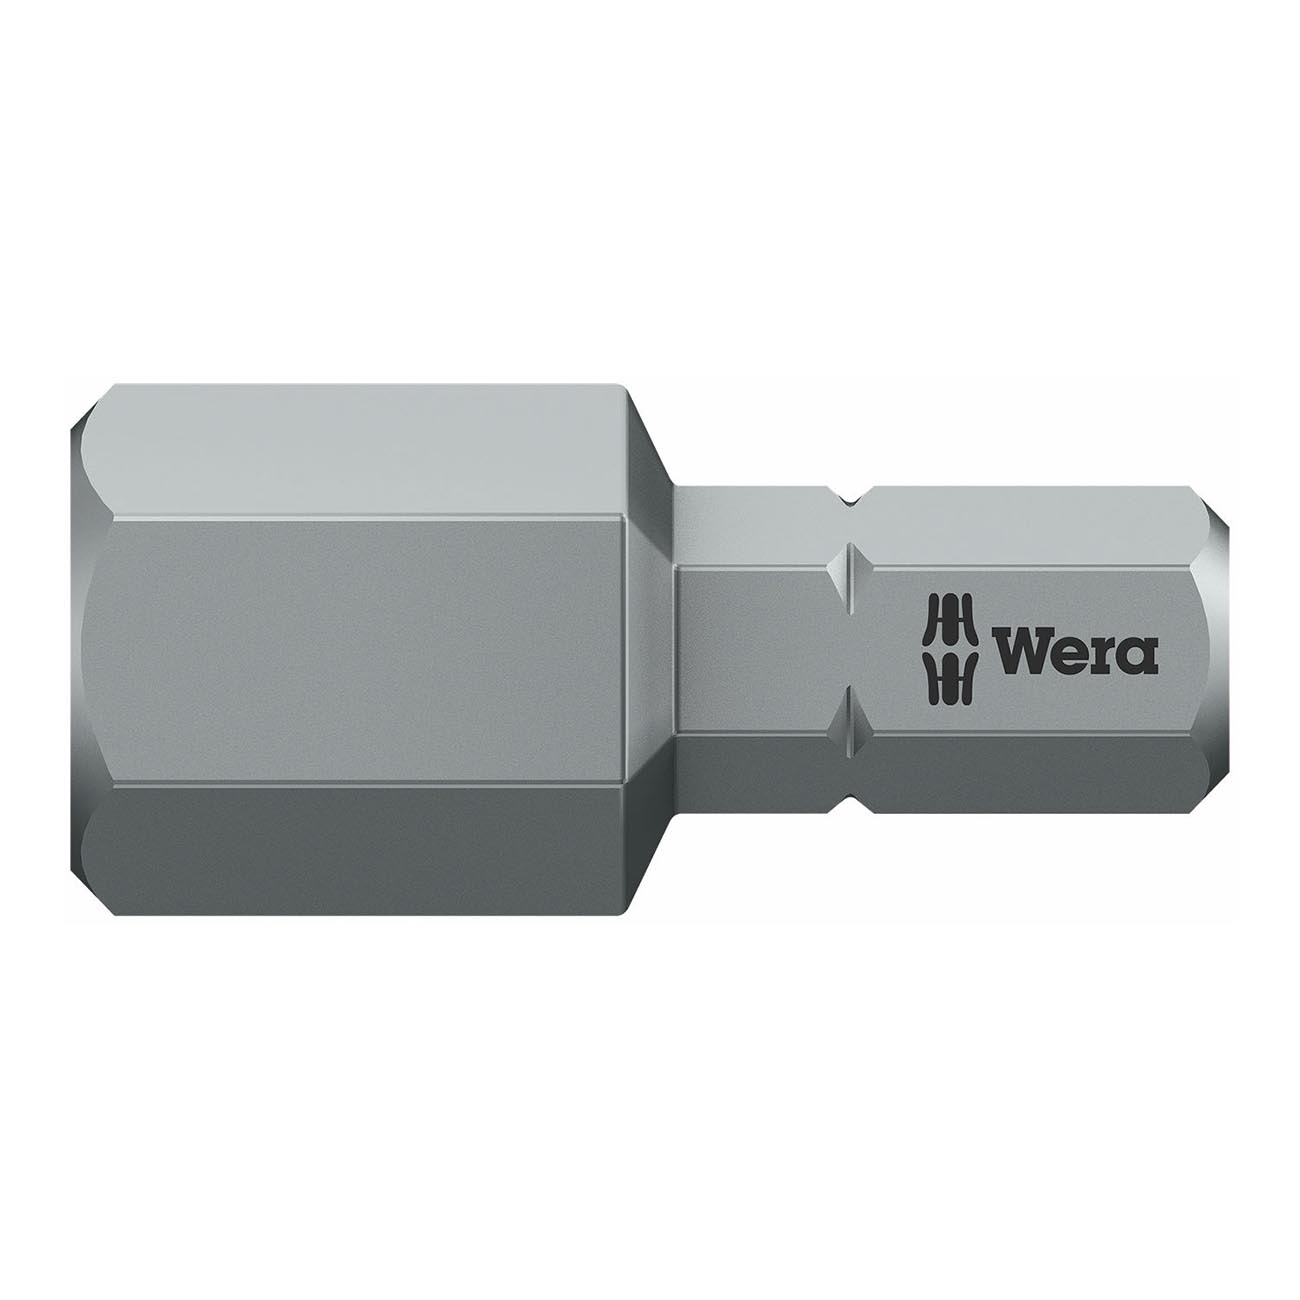 Wera Series 1 840/1 Z Sheet Metal Bit Hexagon 10mm Head x 1/4in Drive